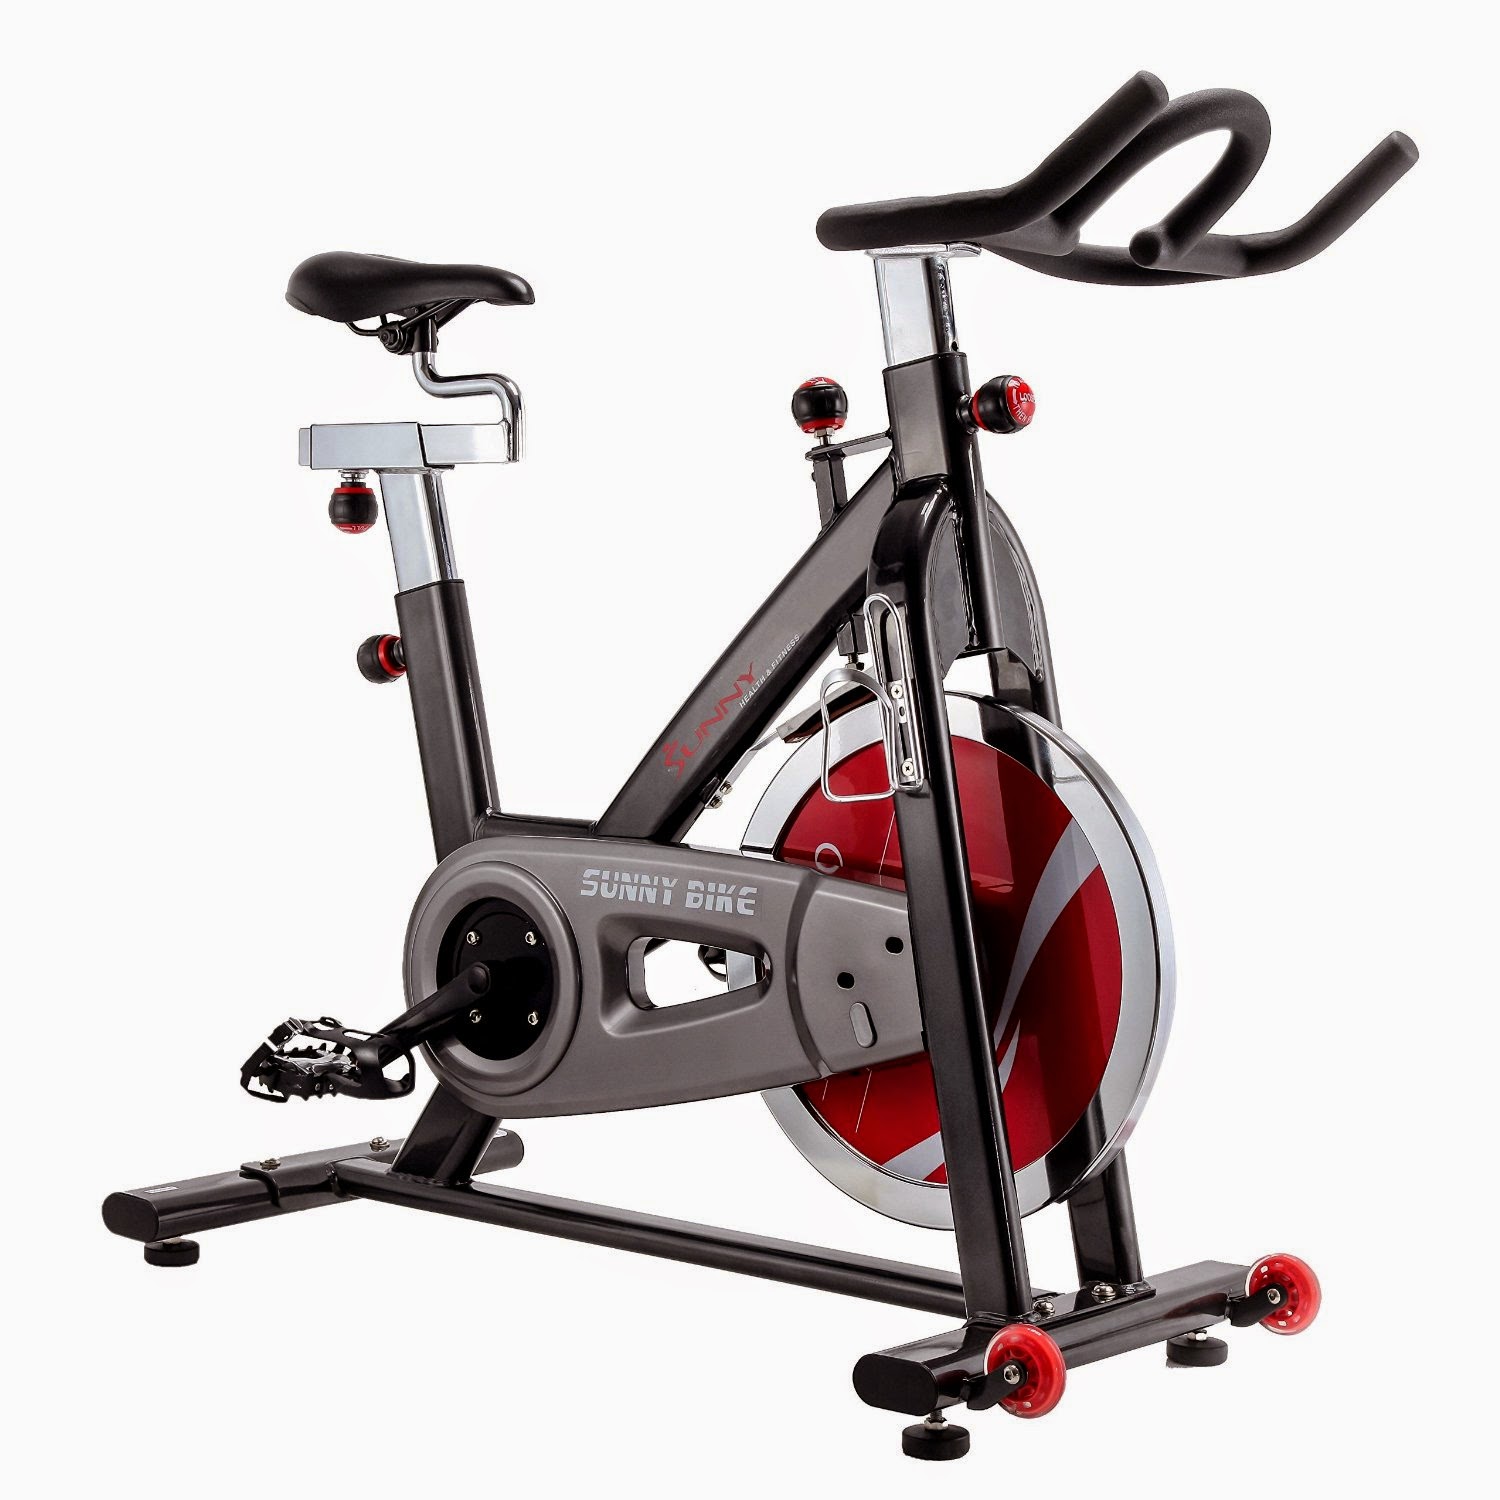 Sunny Health & Fitness Belt Drive Indoor Cycling Bike SF-B1002 Grey, review, spin bike, 49 lbs flywheel, adjustable resistance, fully adjustable seat & handlebars